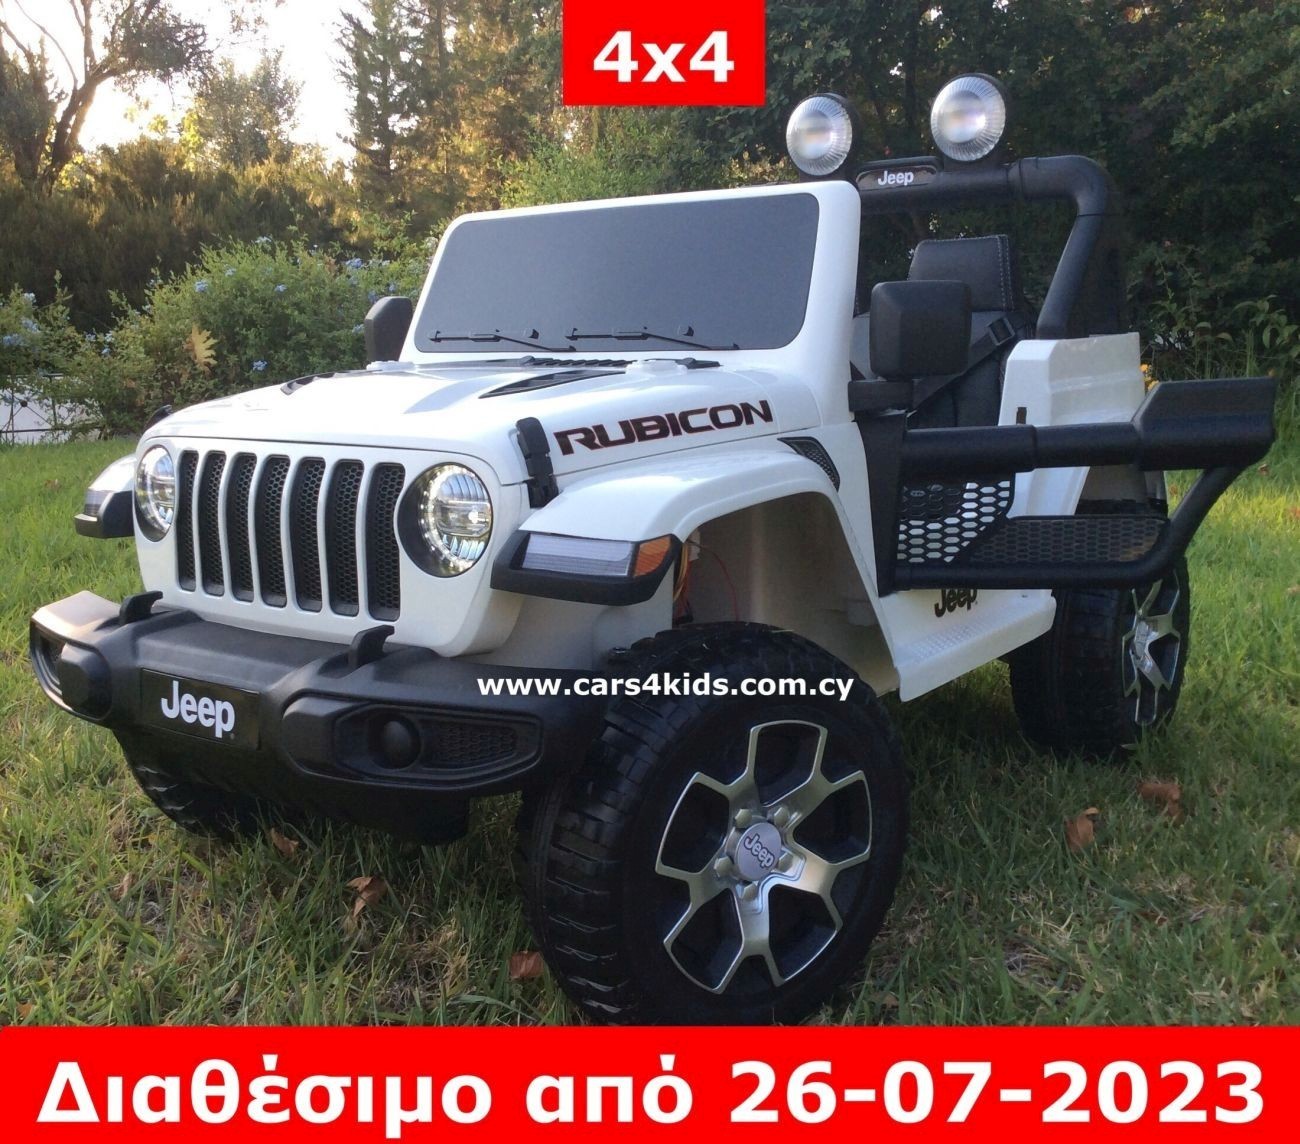 Jeep Wrangler White with 2.4G R/C under License